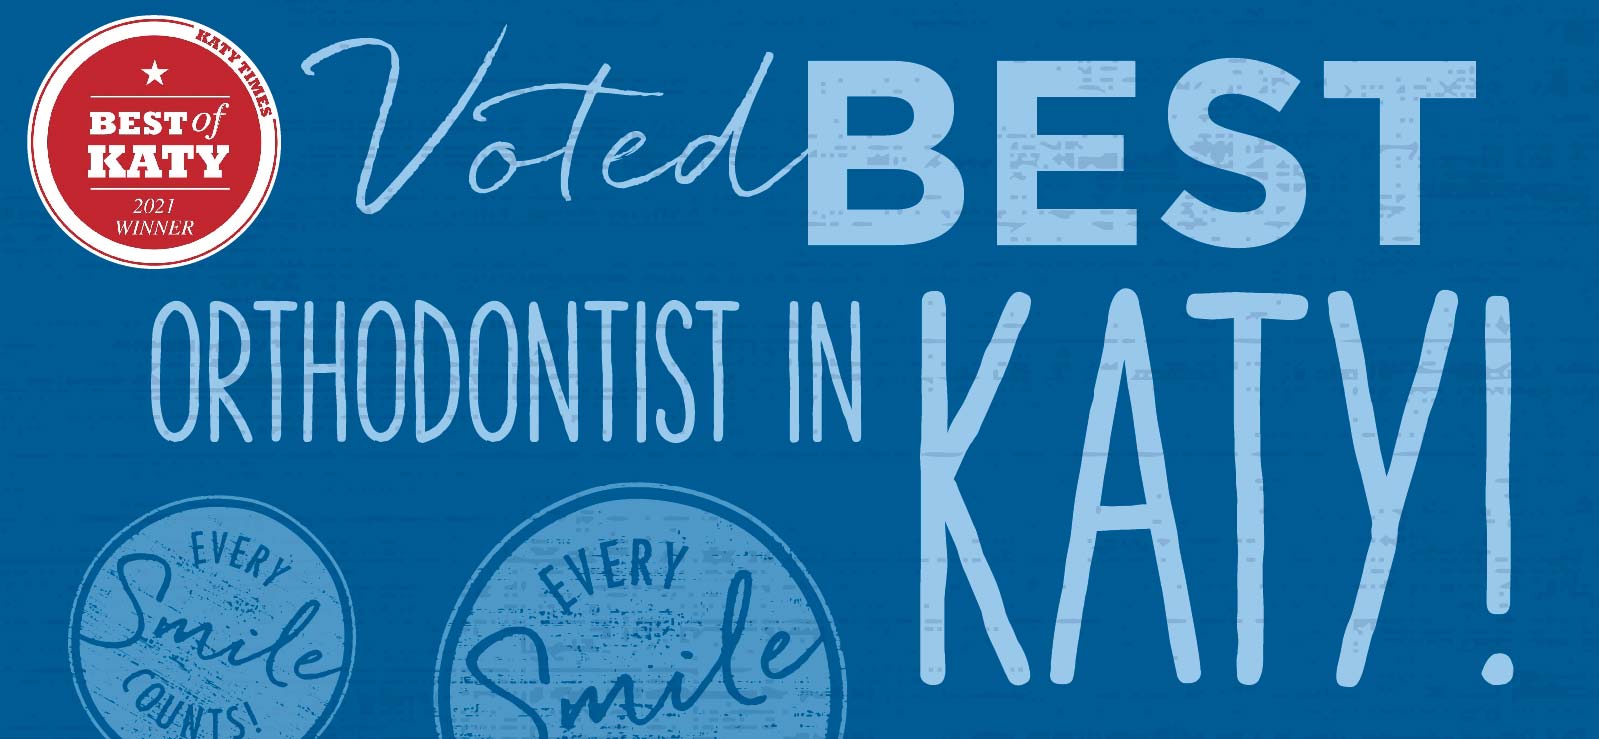 Voted Best Orthodontist in Katy